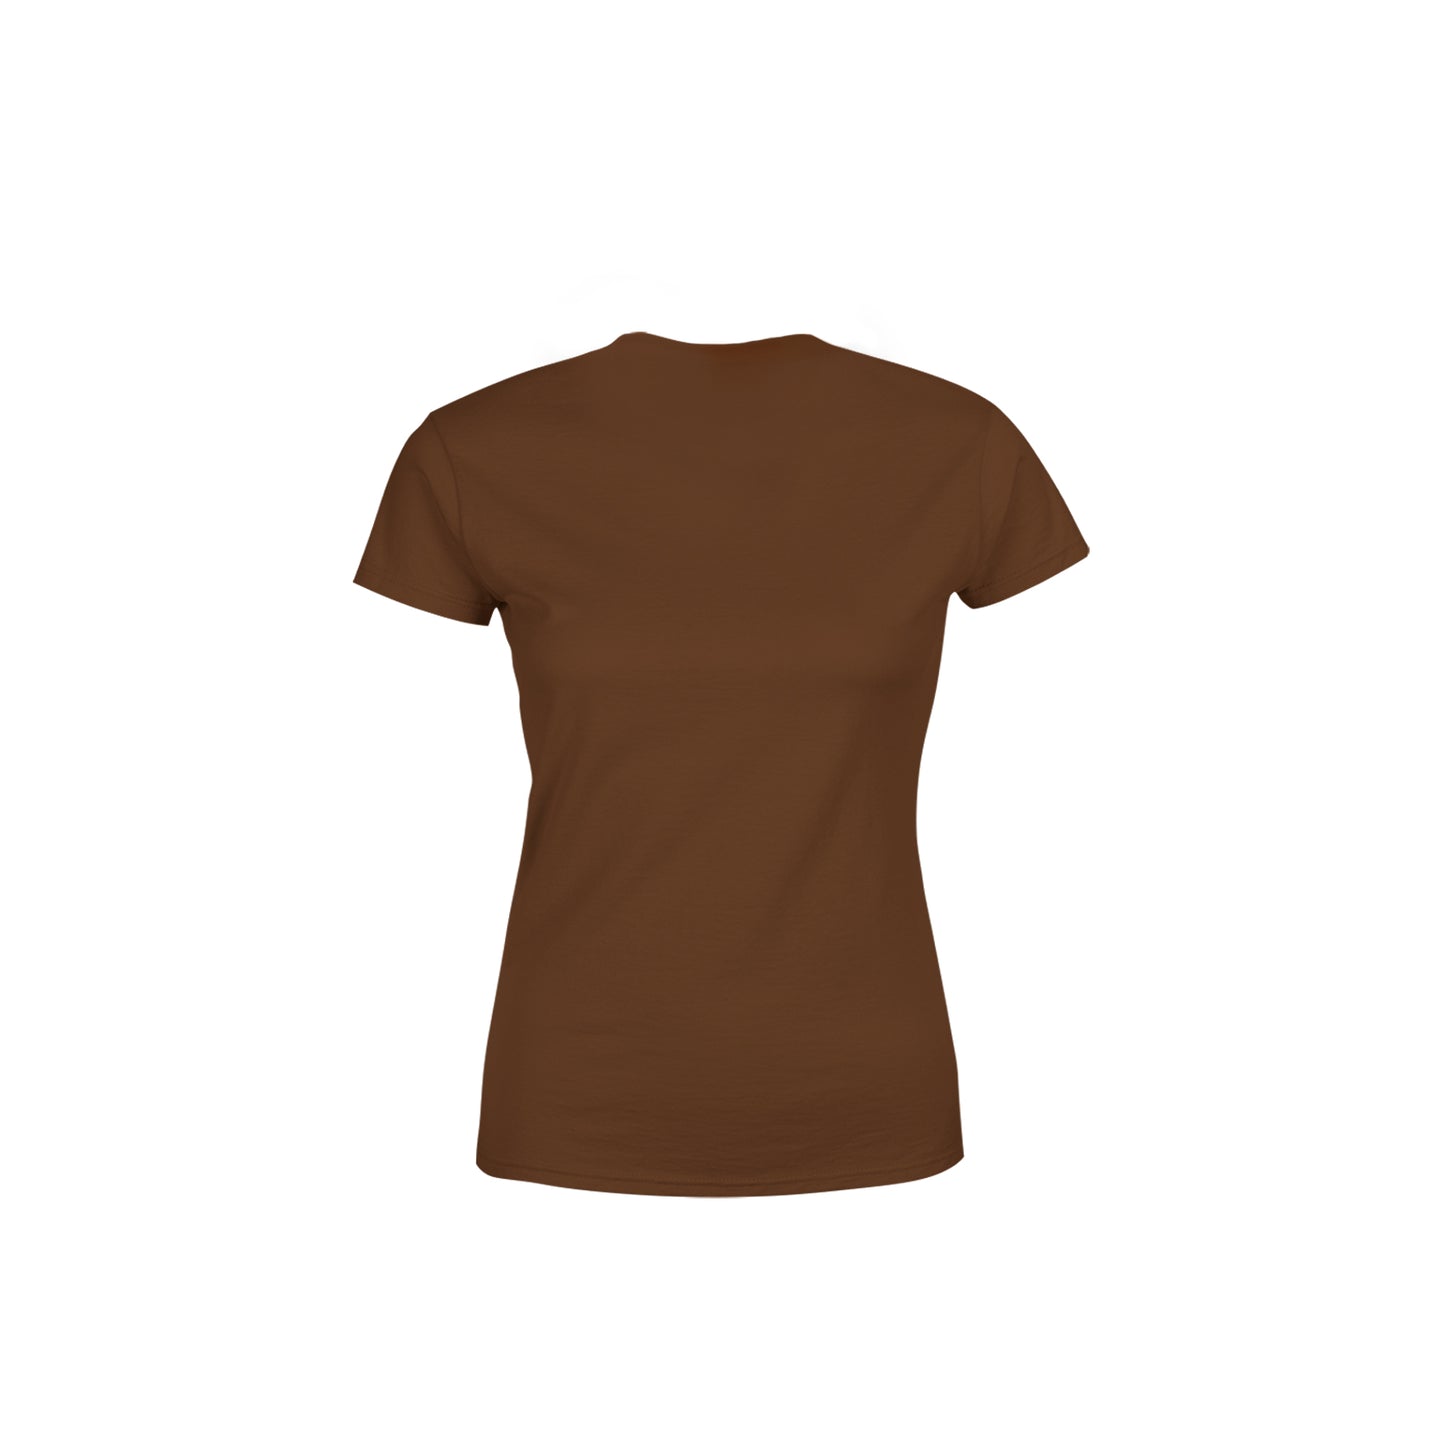 00 Number Women's T-Shirt (Brown)